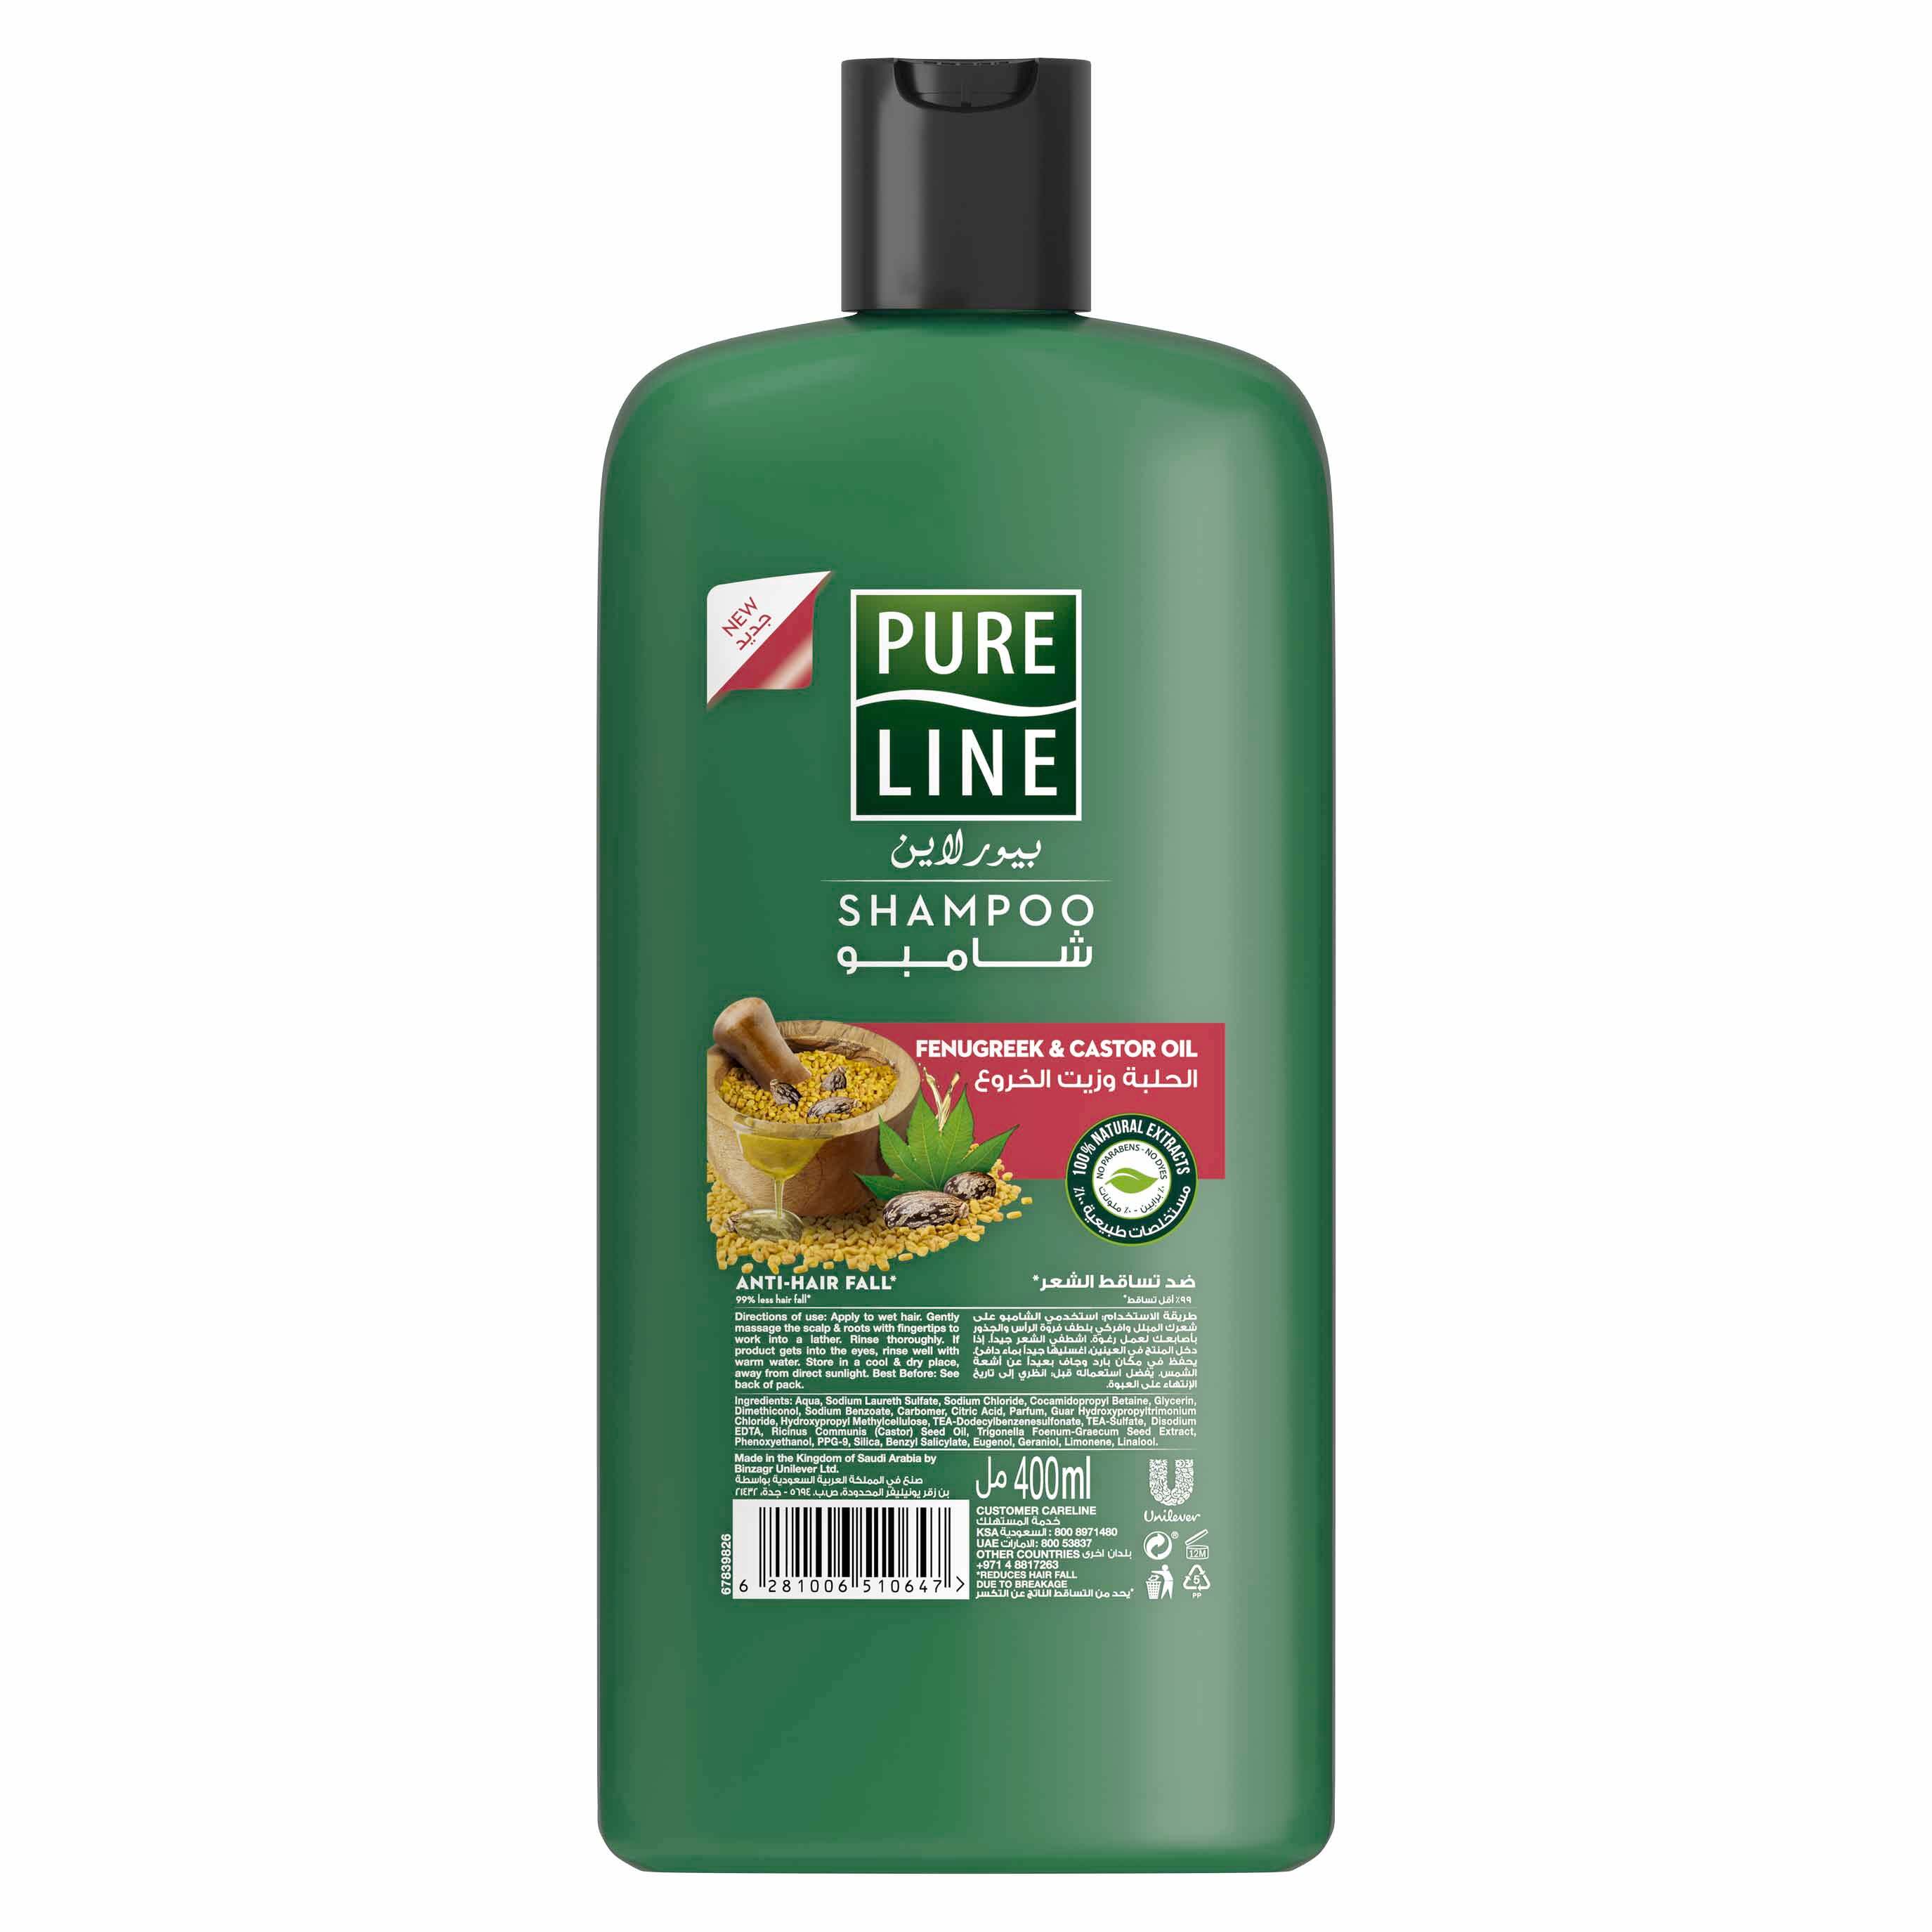 Pure Line Shampoo with Fenugreek & Castor Oil, 400 ml